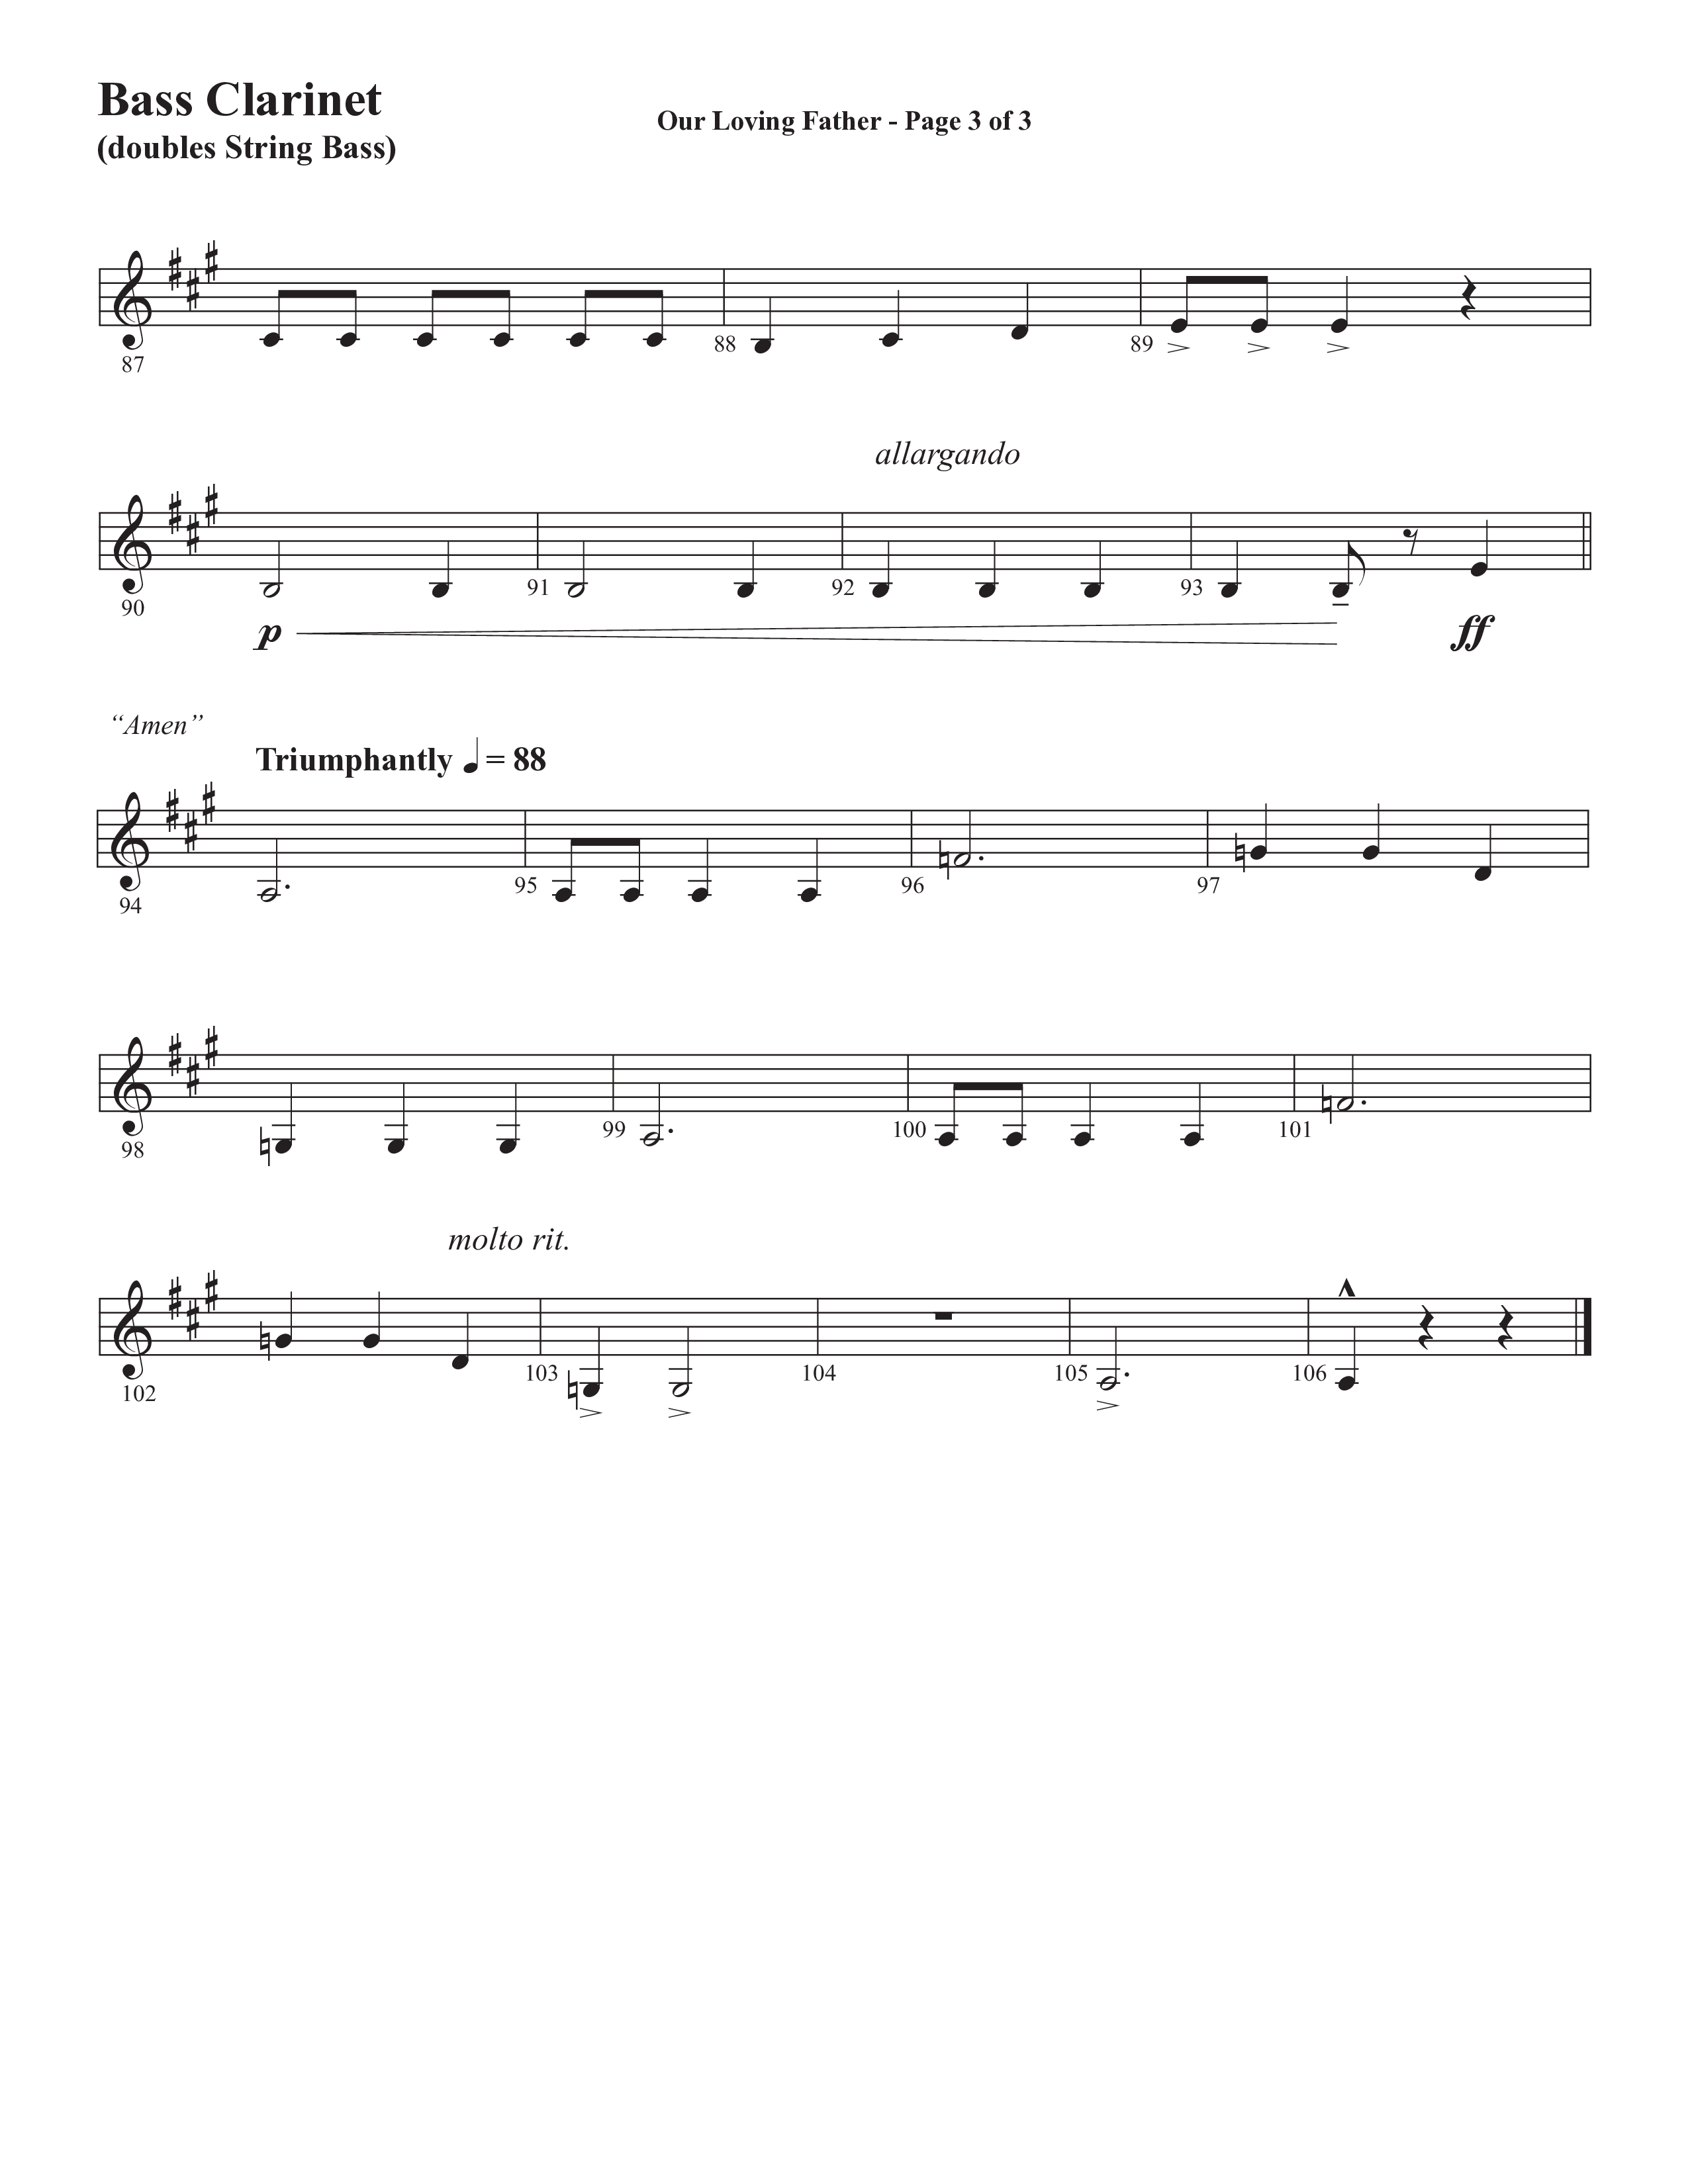 Our Loving Father (Choral Anthem SATB) Bass Clarinet (Semsen Music / Arr. Phillip Keveren)